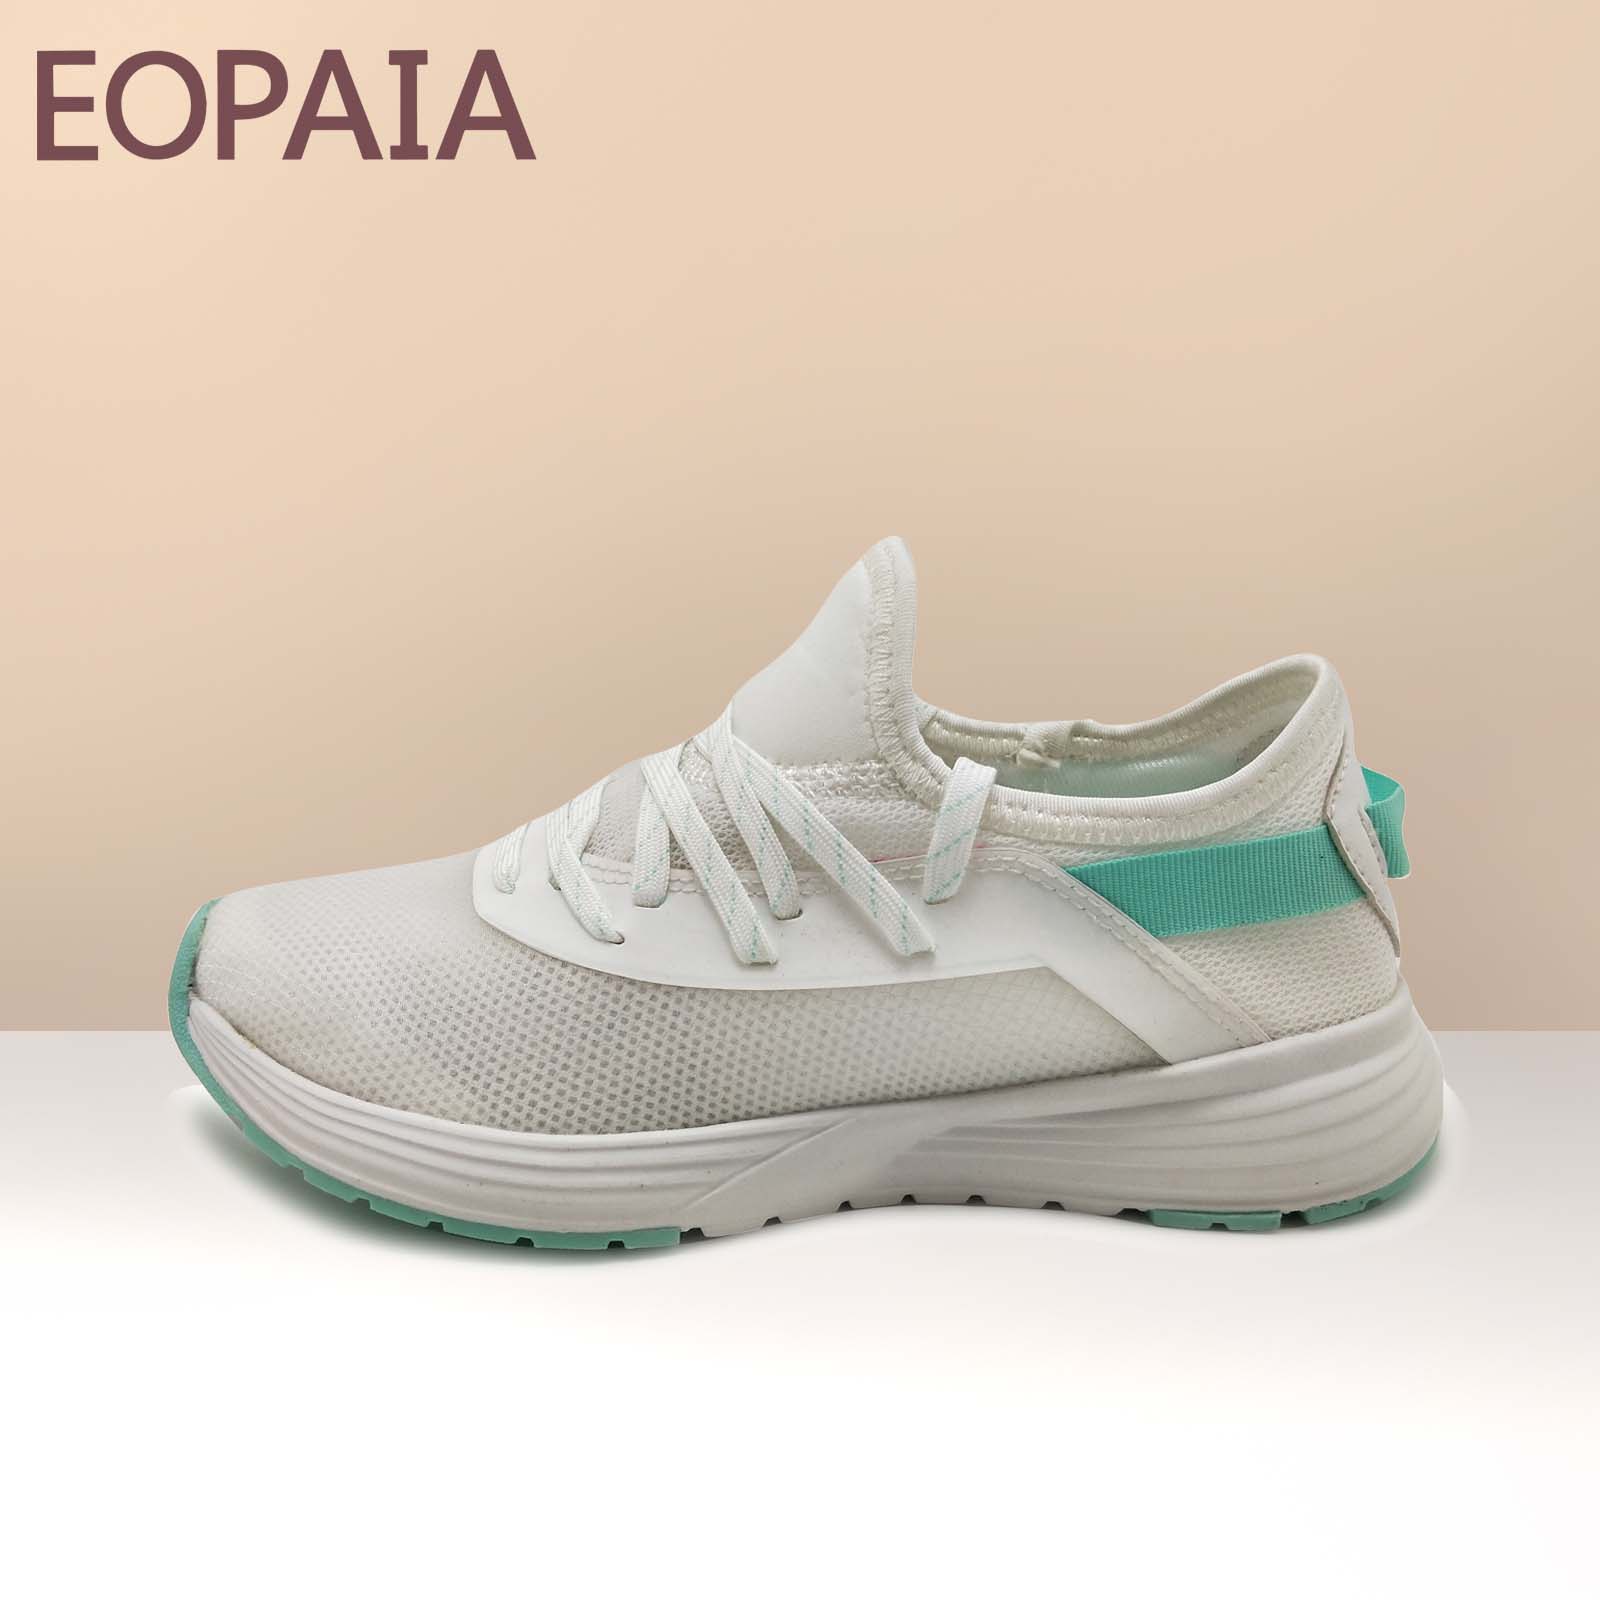 Fly-Rajut Sepatu Knit Sepatu Untuk Wanita Sepatu Olahraga Sepatu Fashion Kasual Lace-up Slip Pada Sepatu Ringan